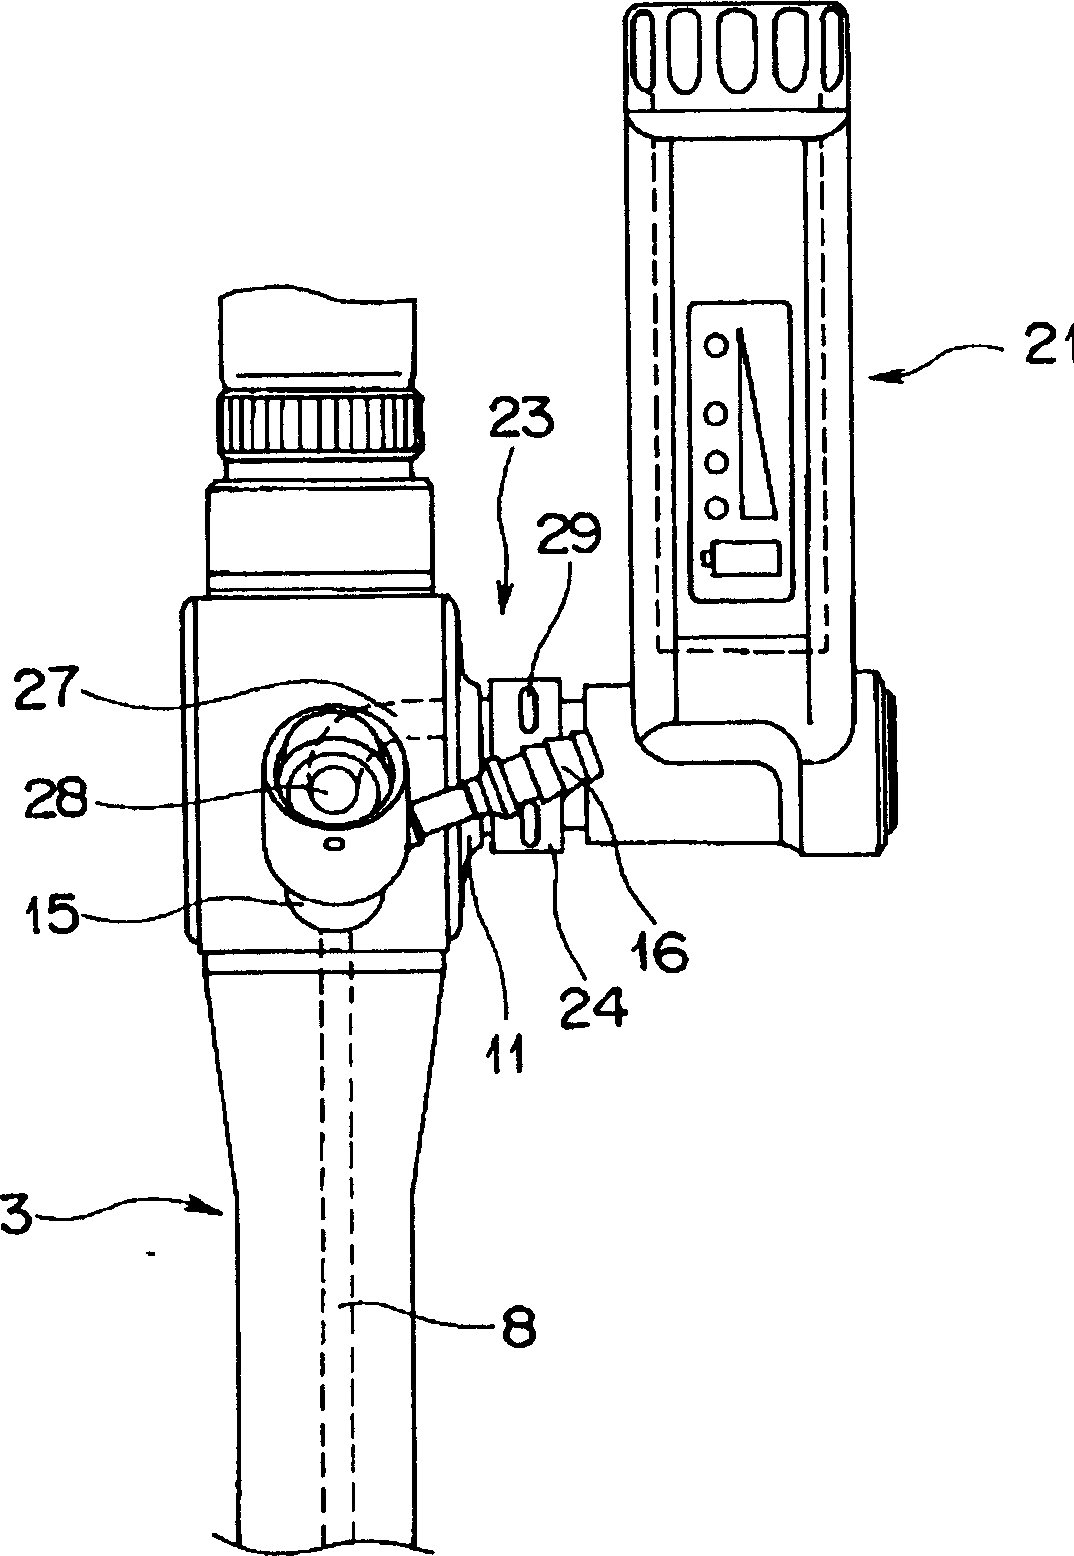 Endoscope device